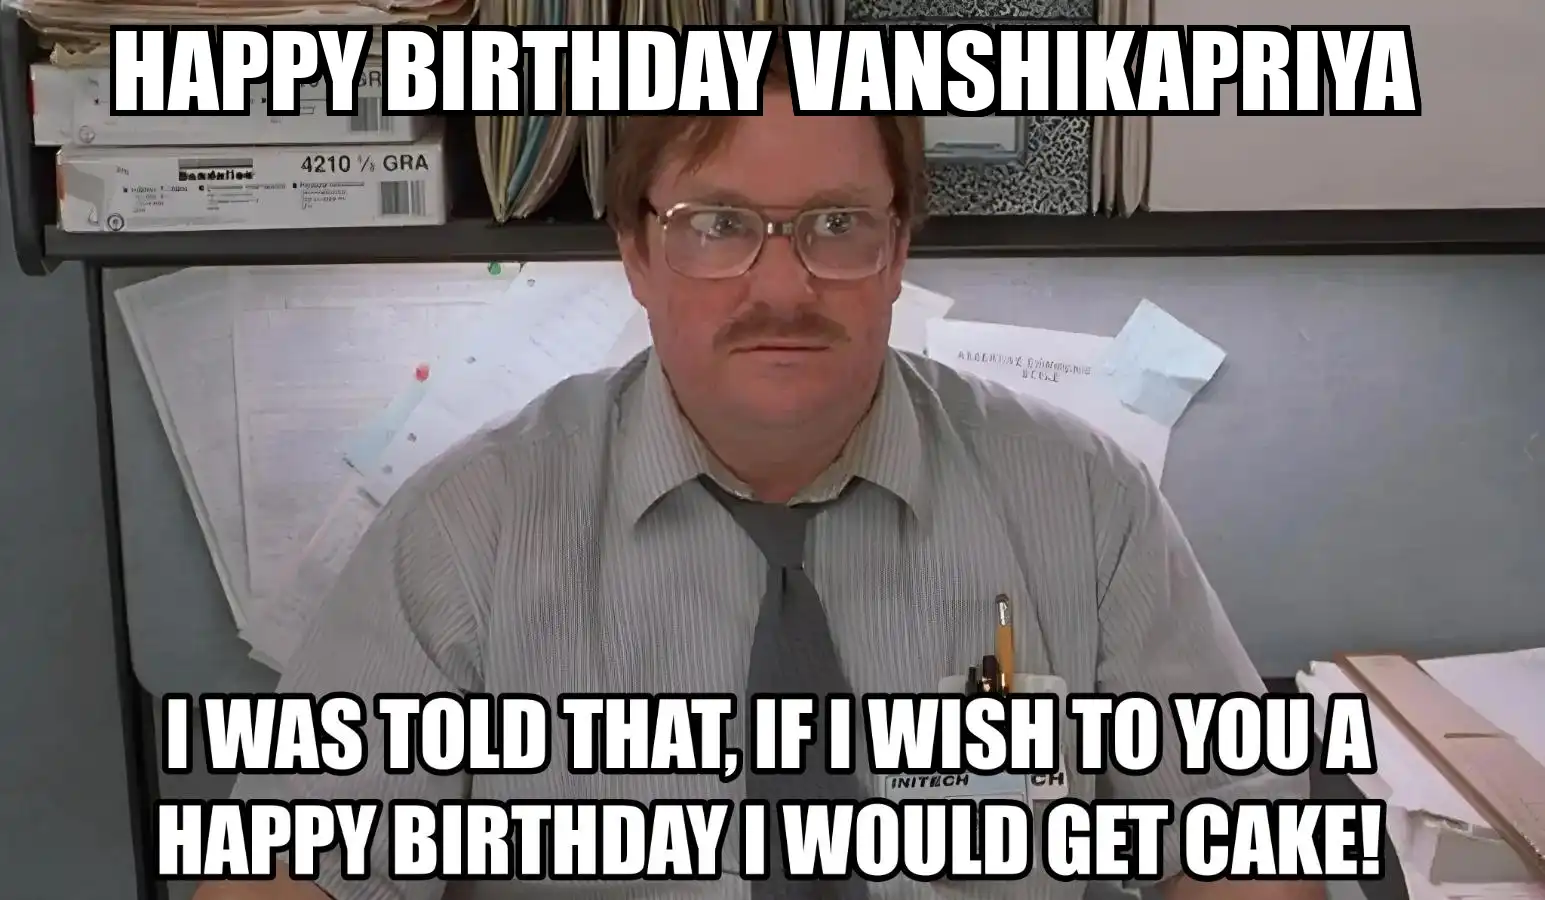 Happy Birthday Vanshikapriya I Would Get A Cake Meme